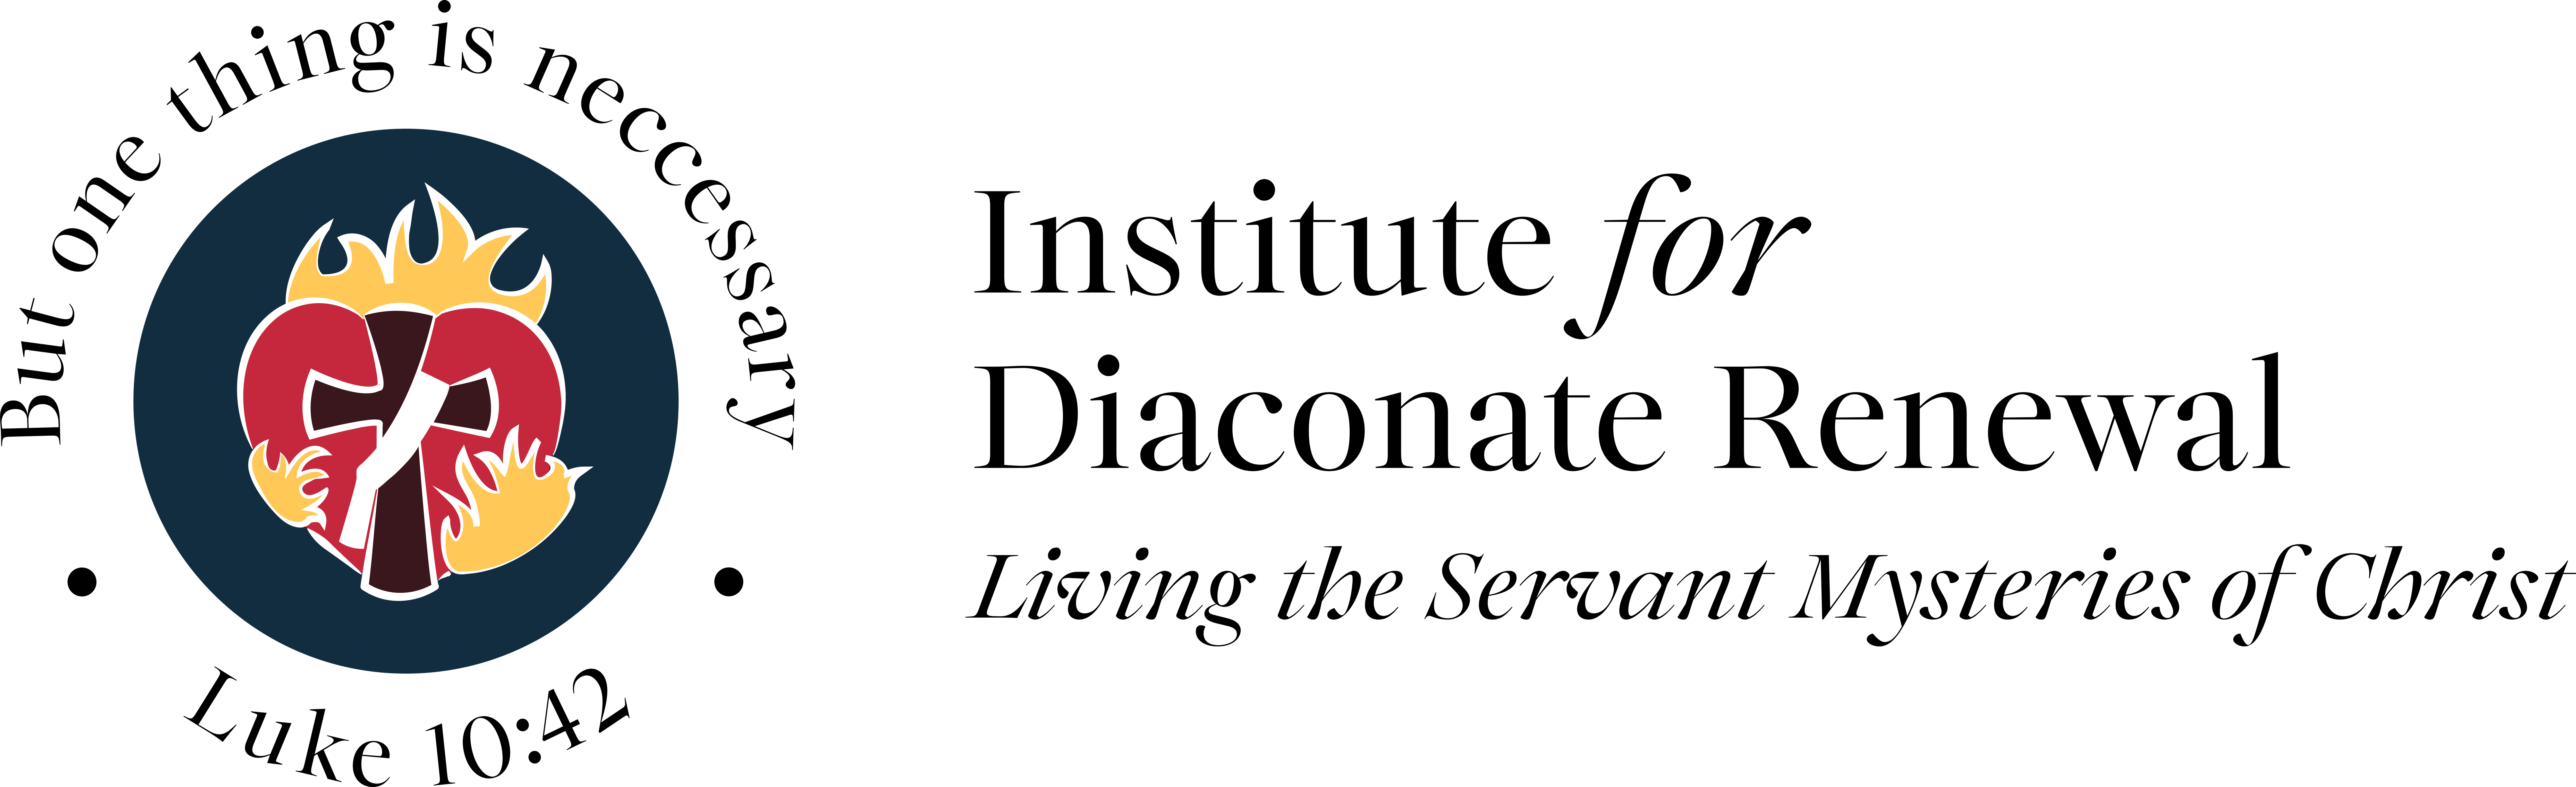 Institute for Diaconate Renewal